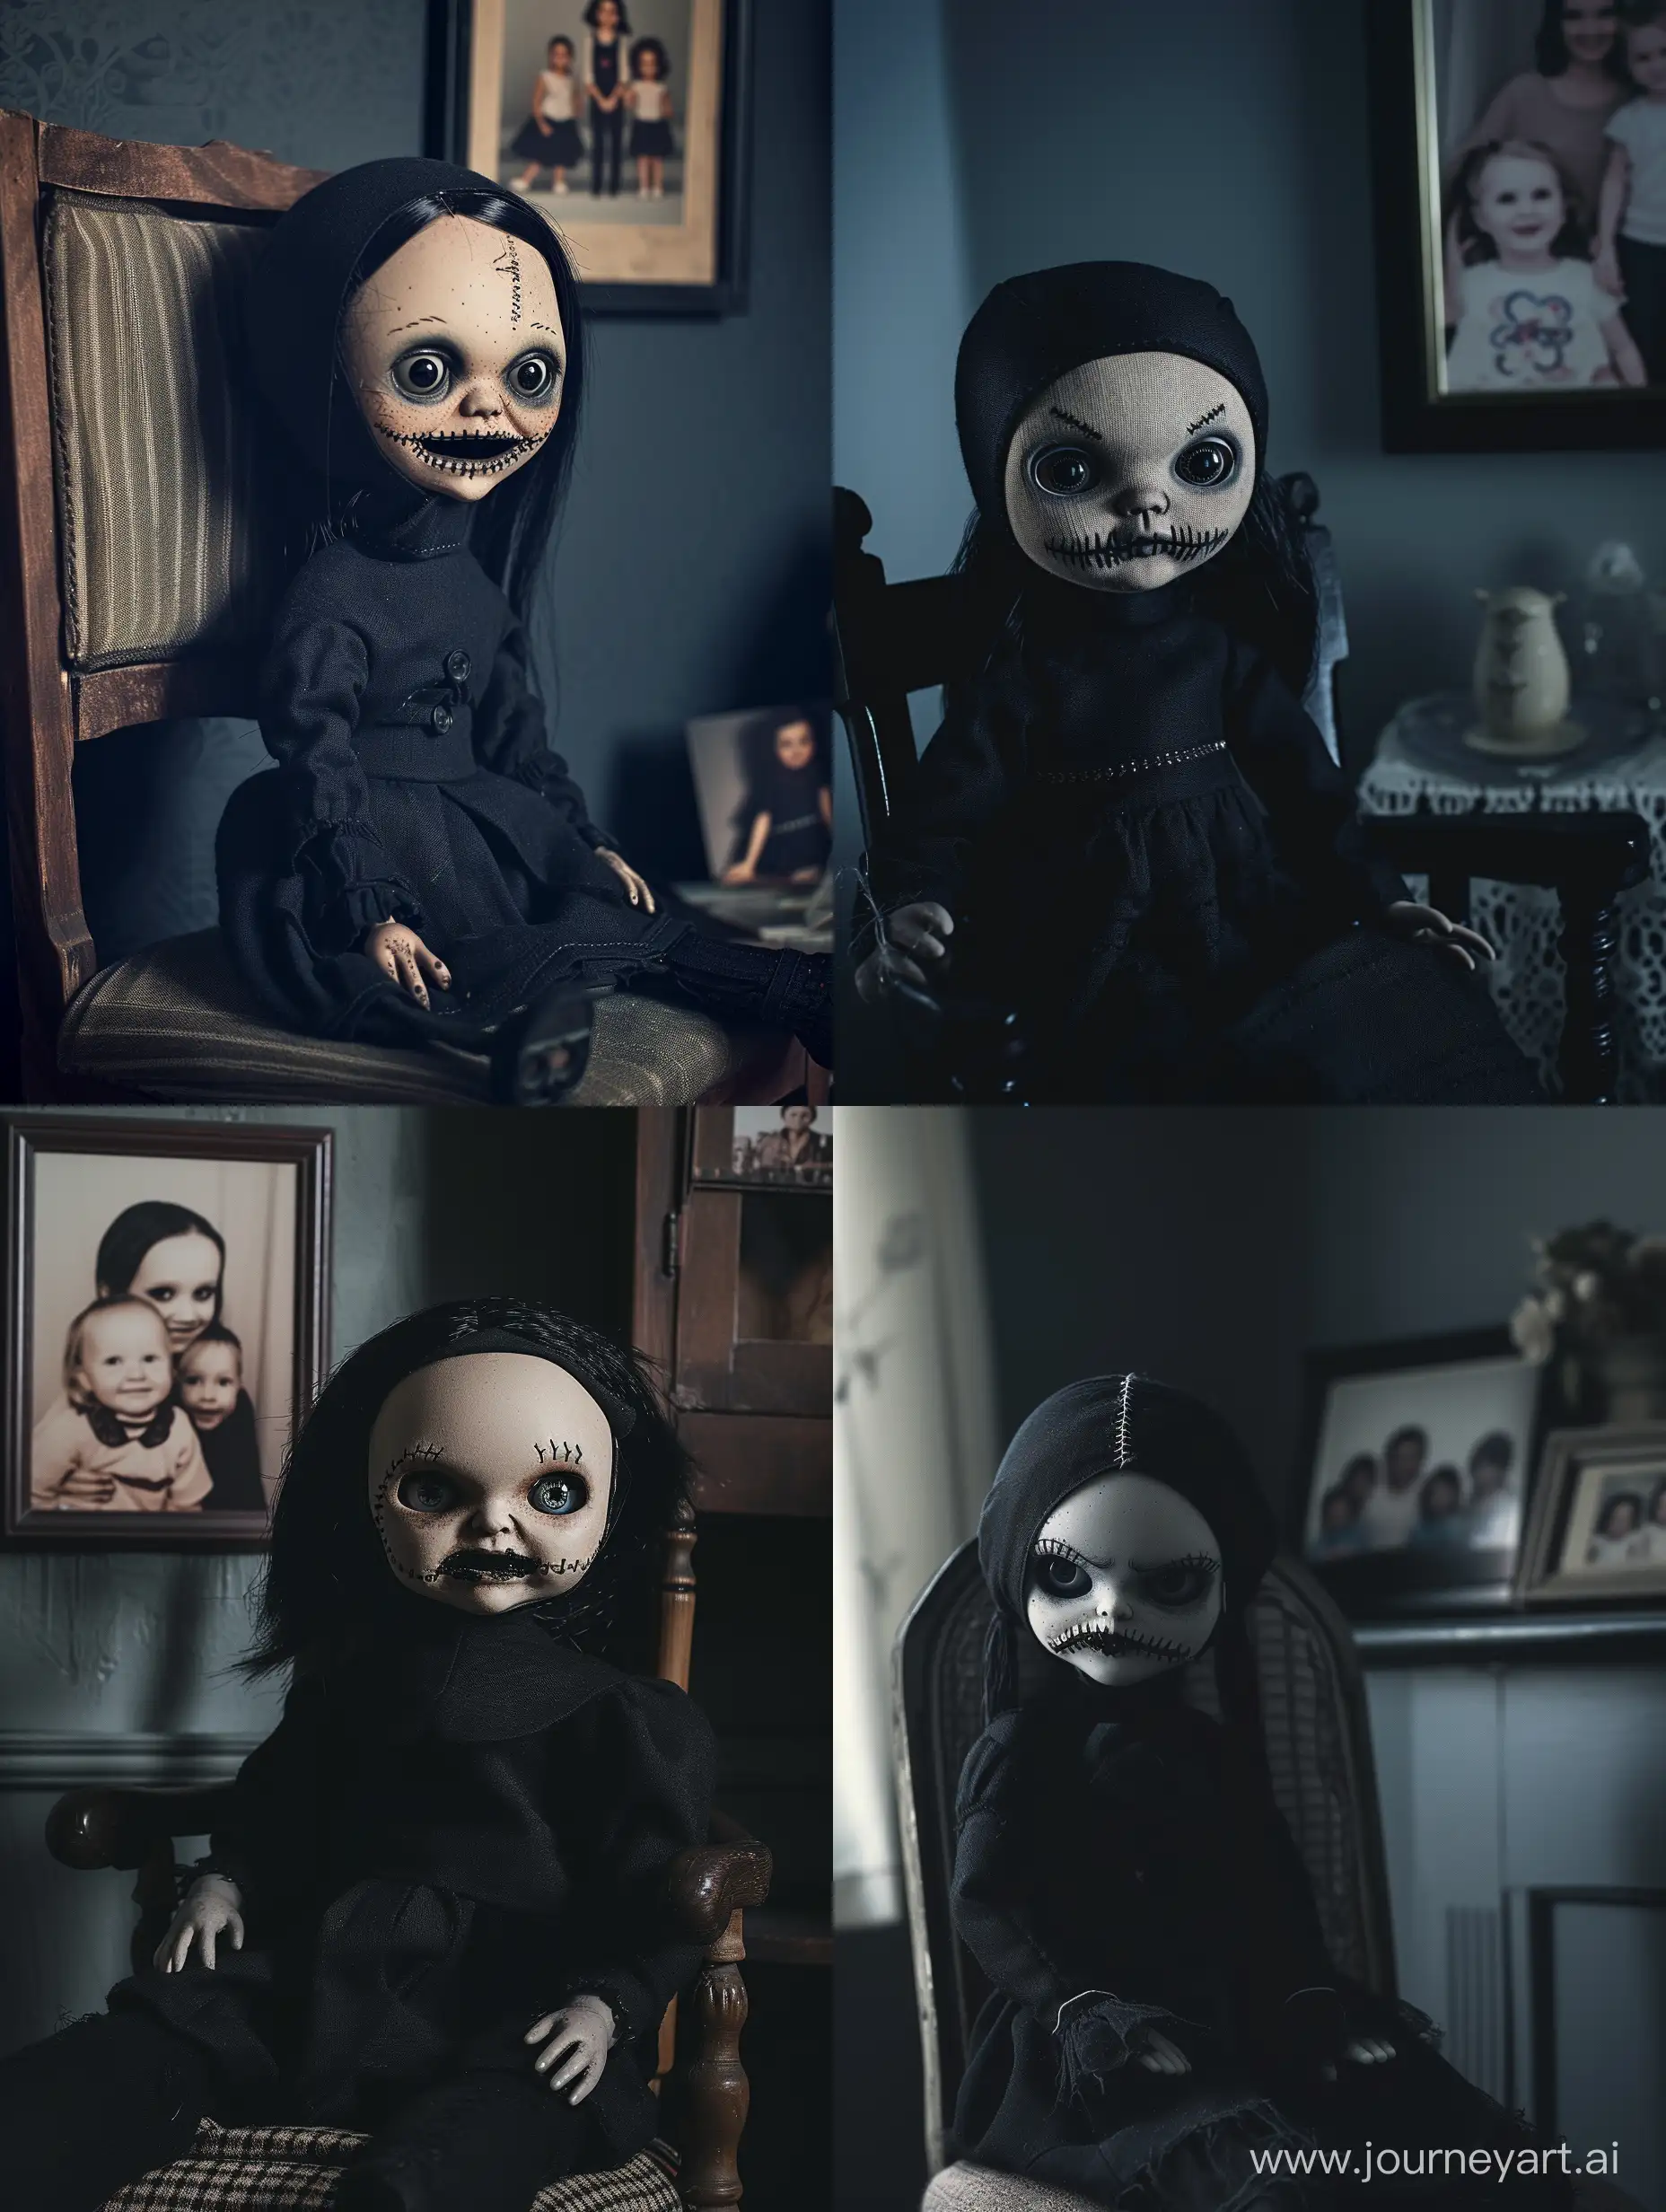 Creepy-Doll-in-Dark-Room-Eerie-Atmosphere-with-Happy-Family-Photo